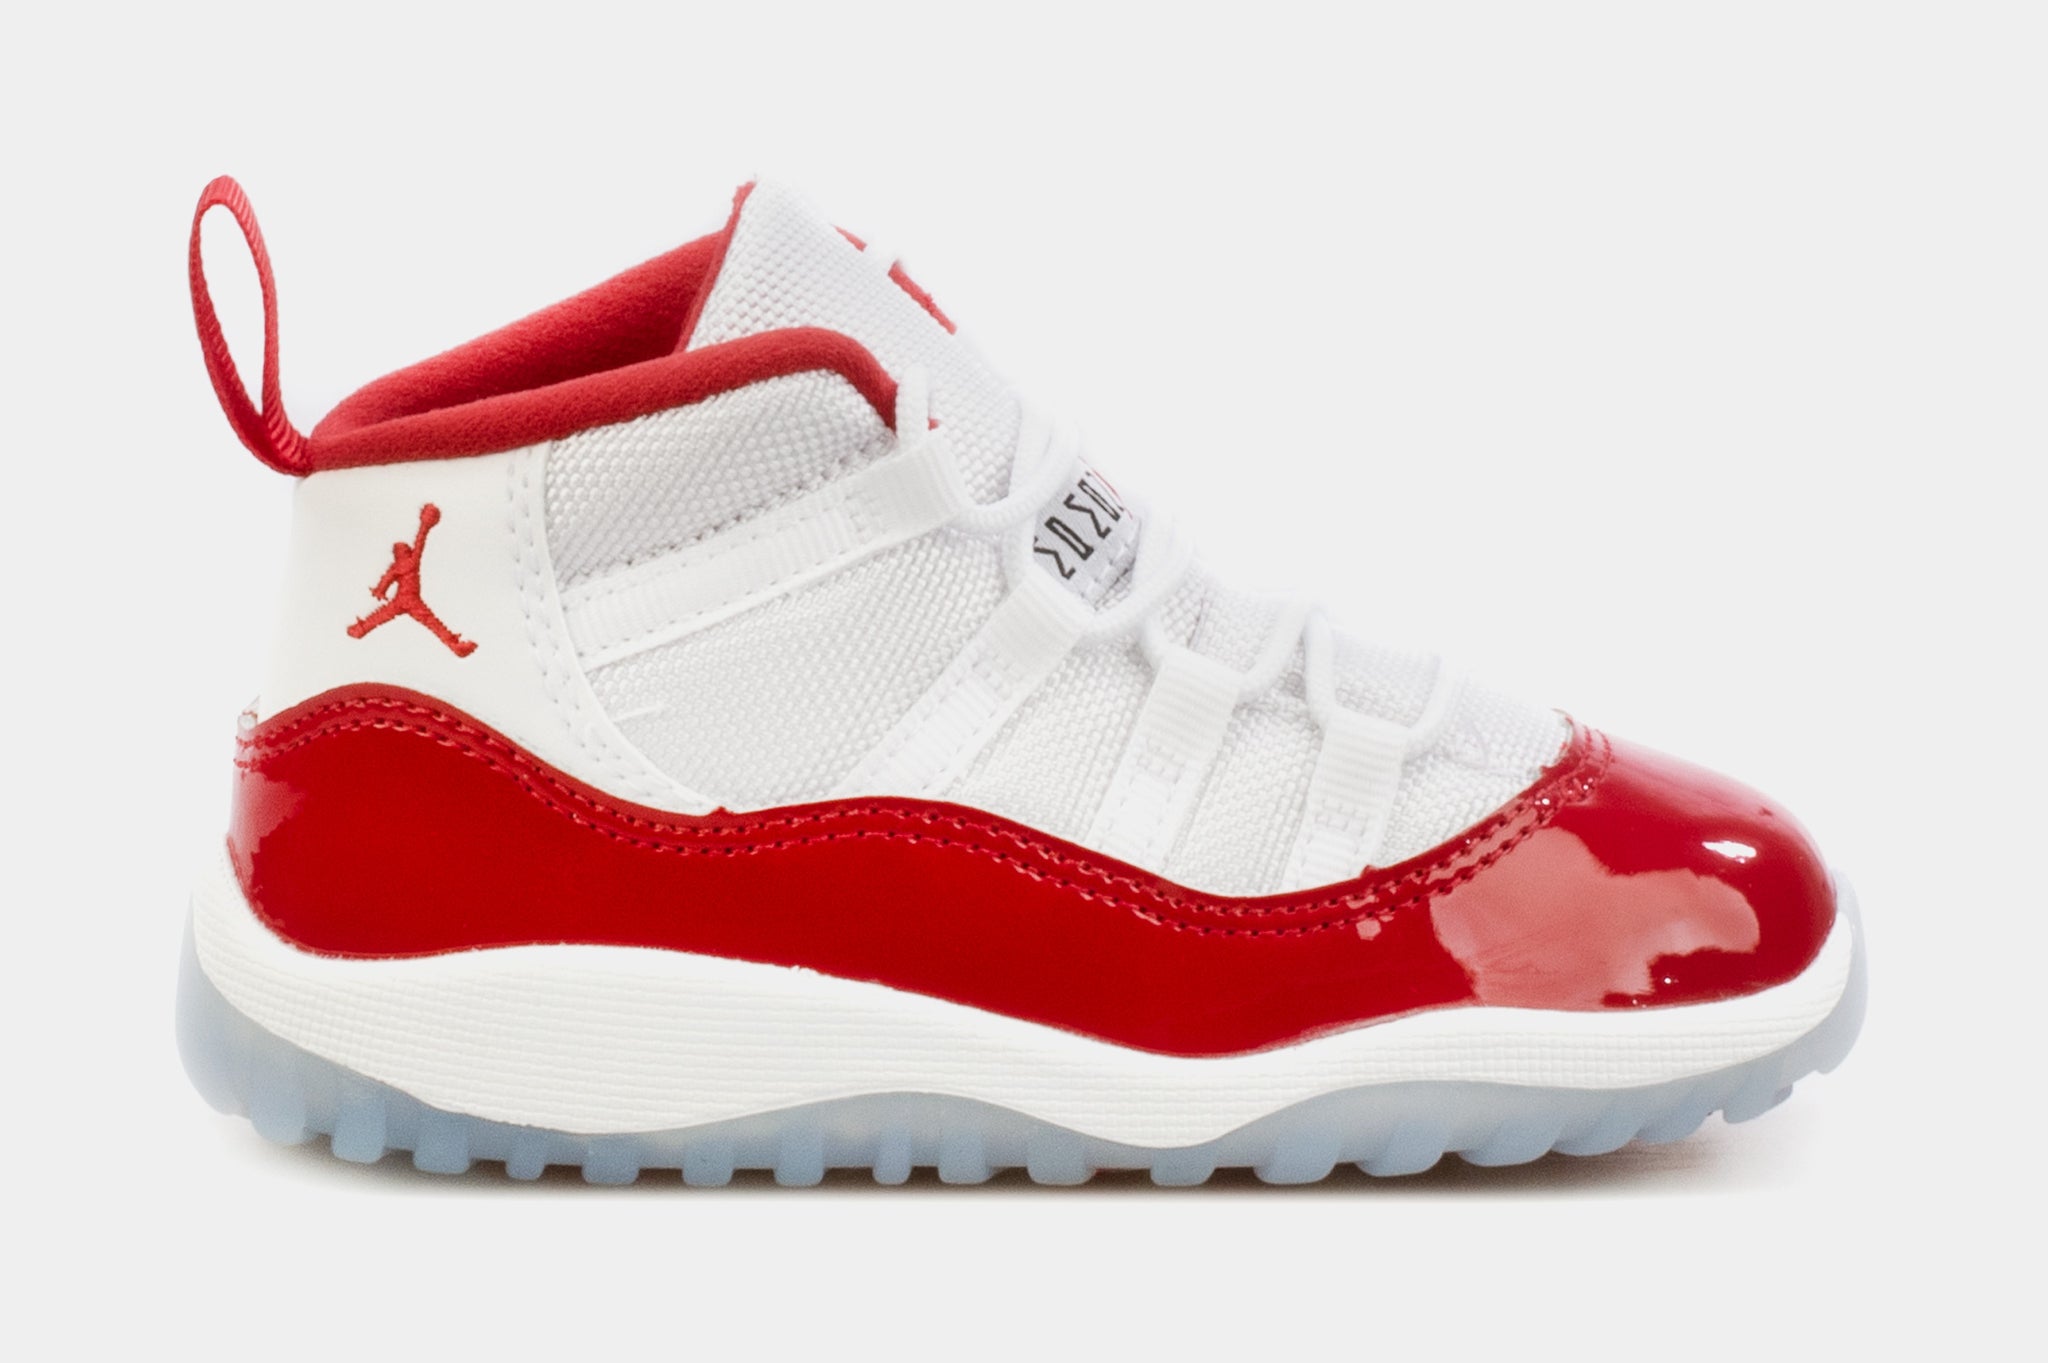 Air Jordan 11 Retro Cherry Infant Toddler Lifestyle Shoes (White/Red ...